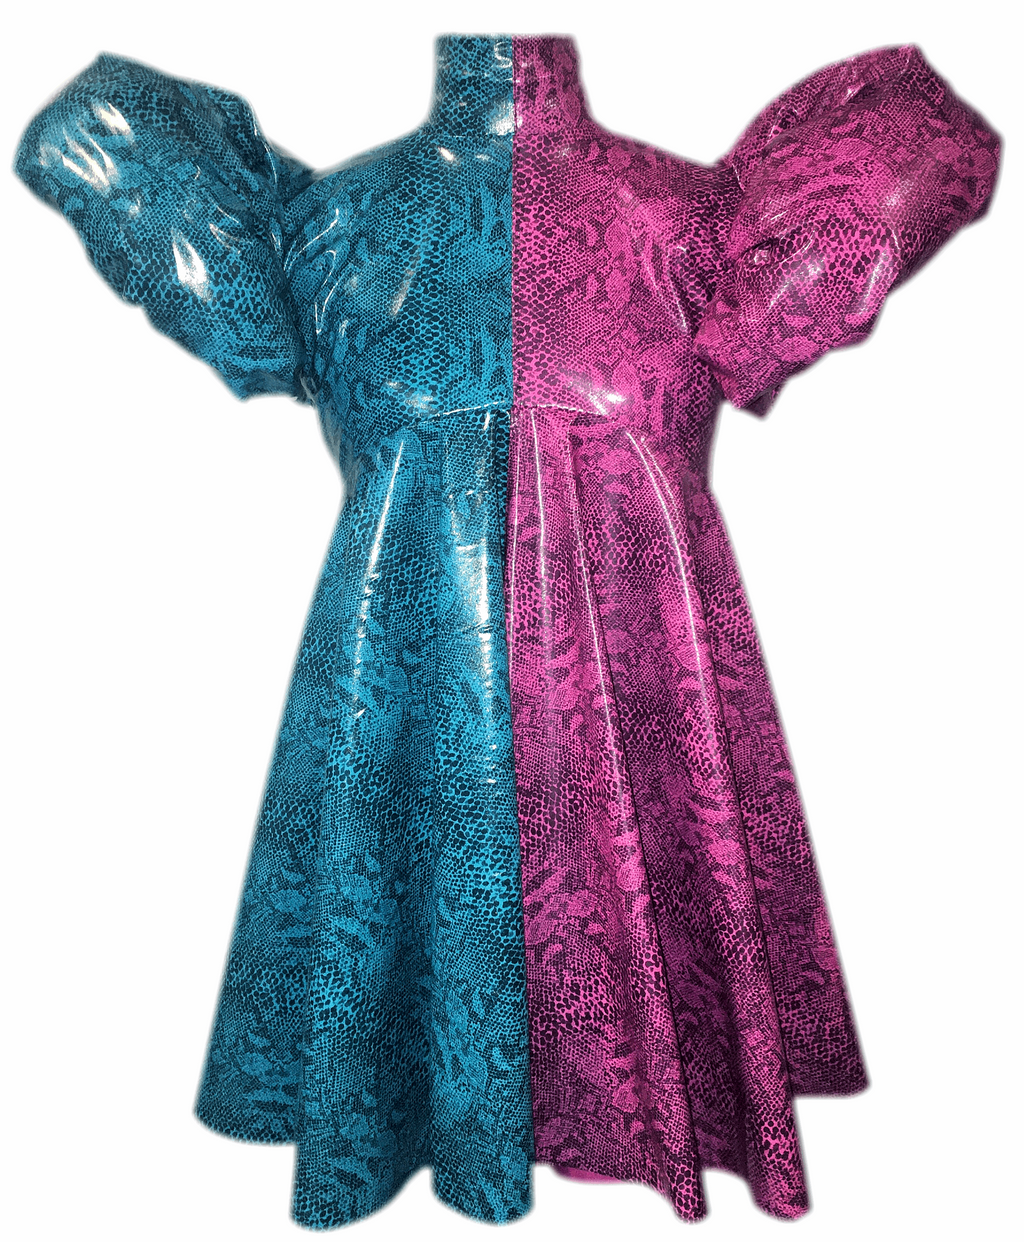 DOLL - Blue/Pink Dress